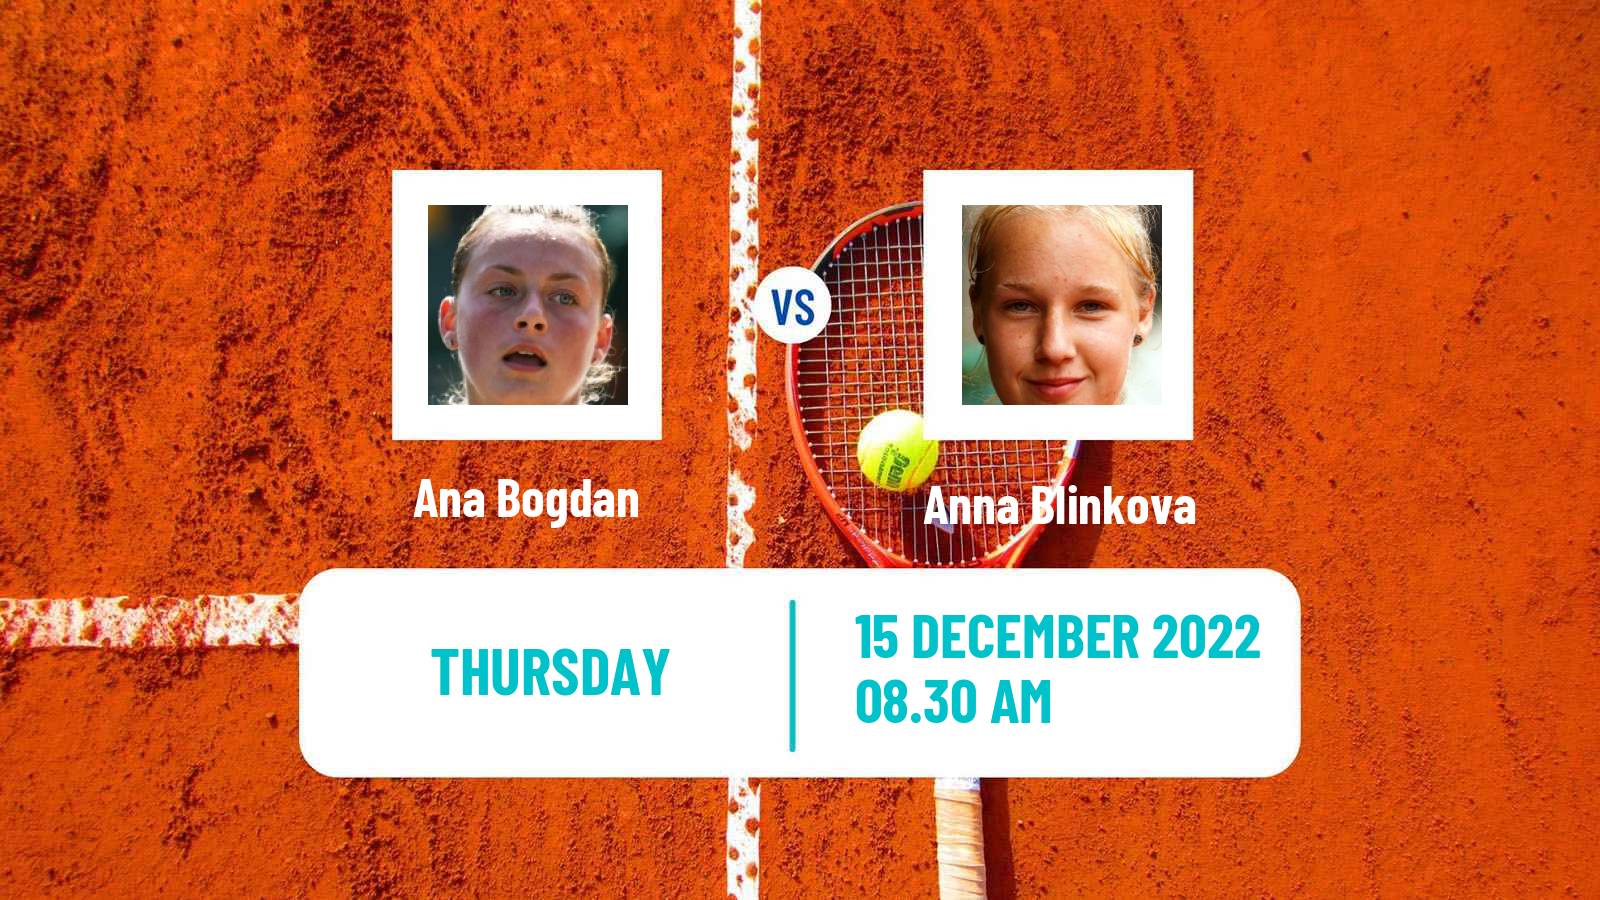 Tennis ATP Challenger Ana Bogdan - Anna Blinkova